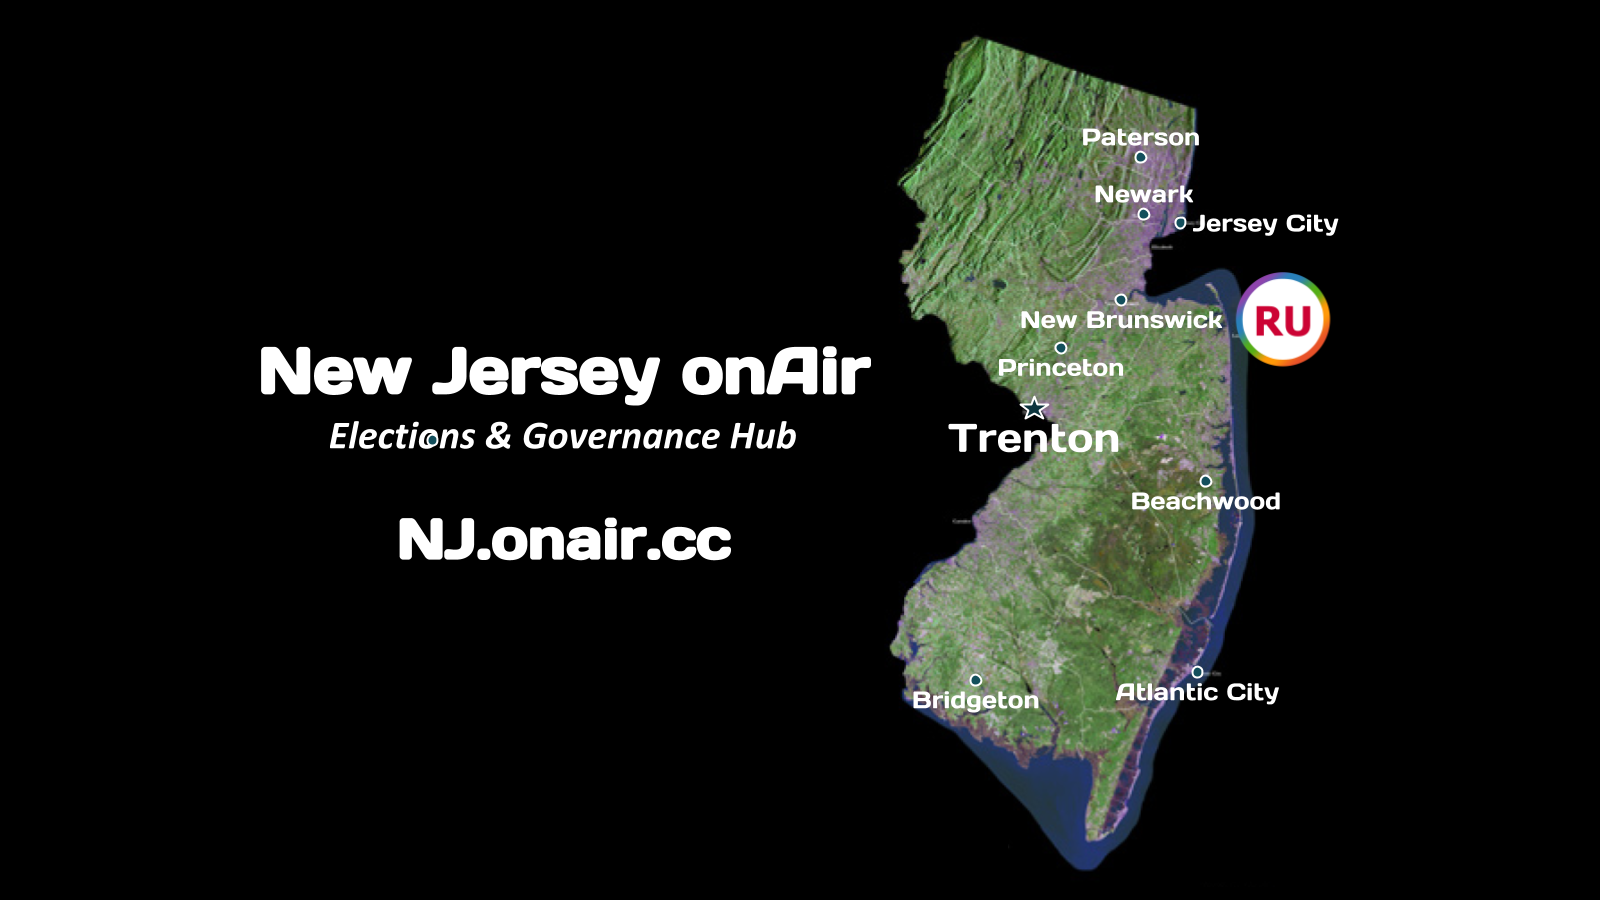 About New Jersey Politics